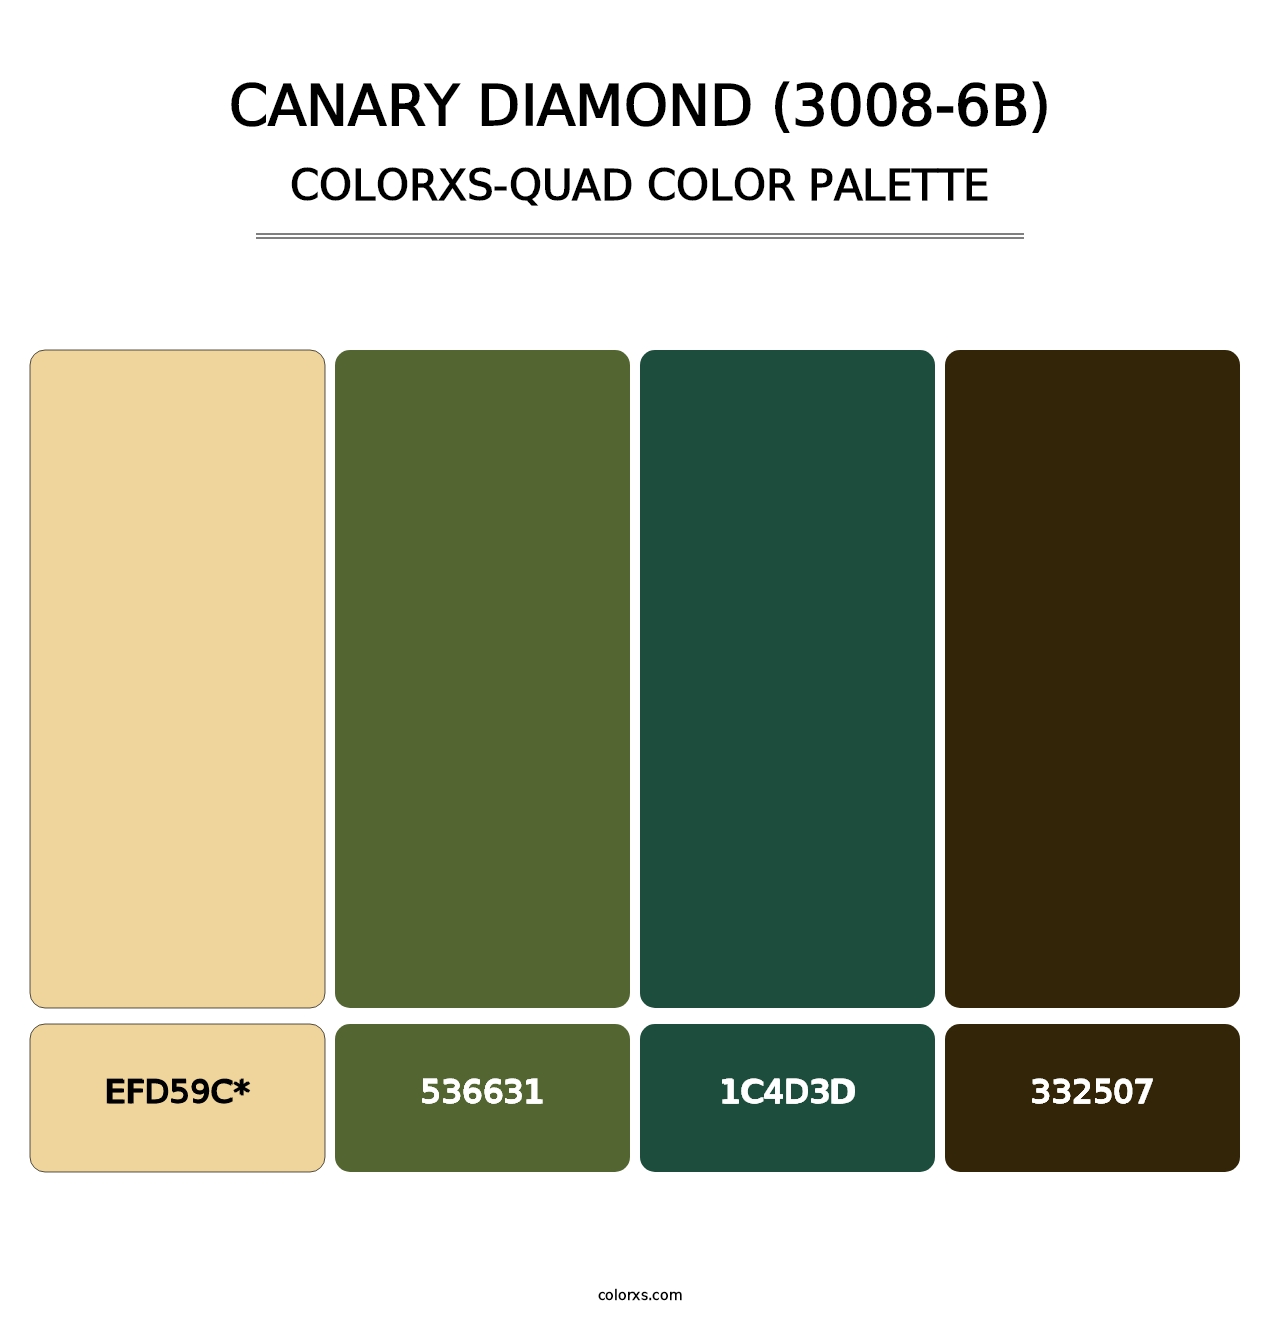 Canary Diamond (3008-6B) - Colorxs Quad Palette